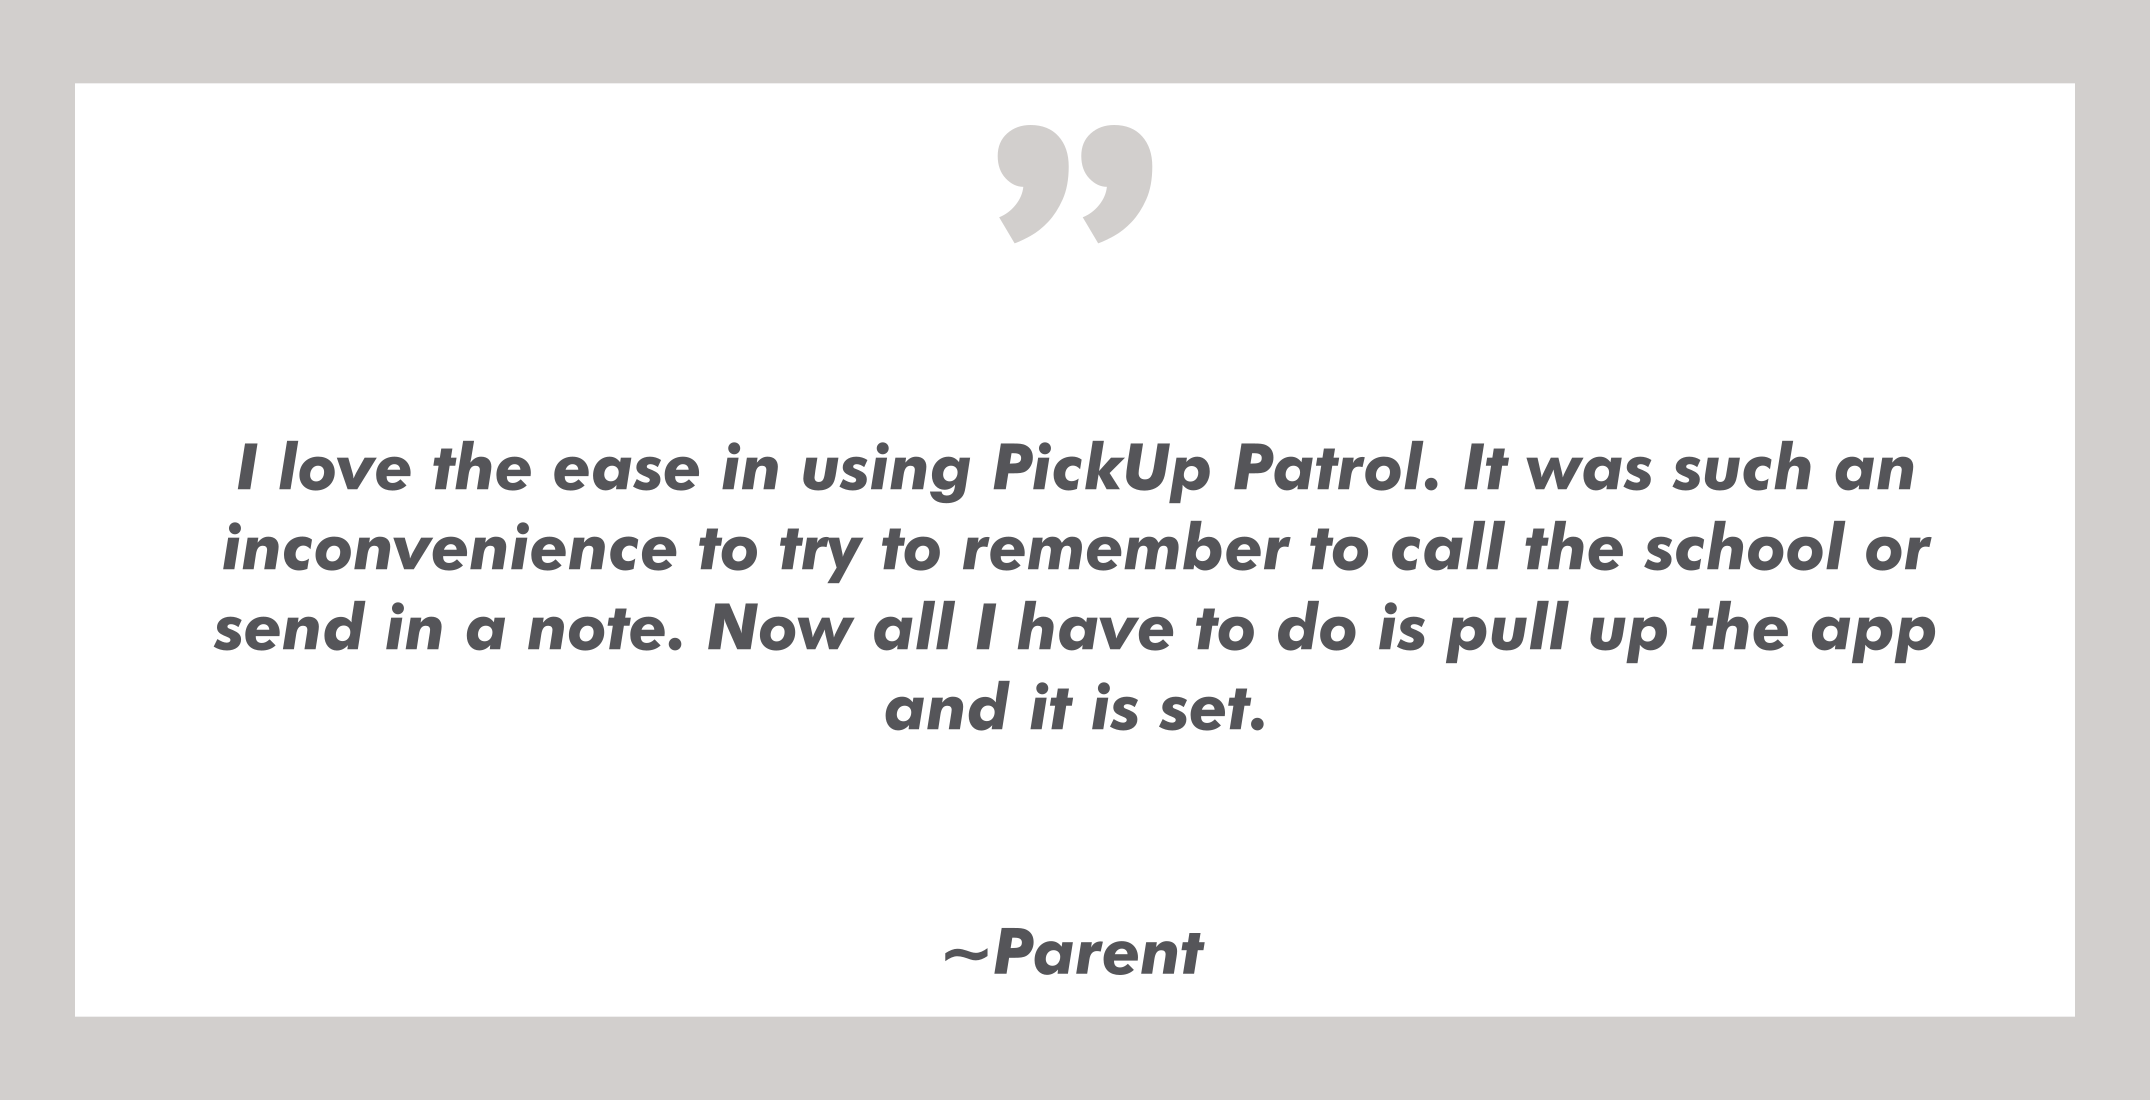 PickUp Patrol school dismissal solution testimonial from parent